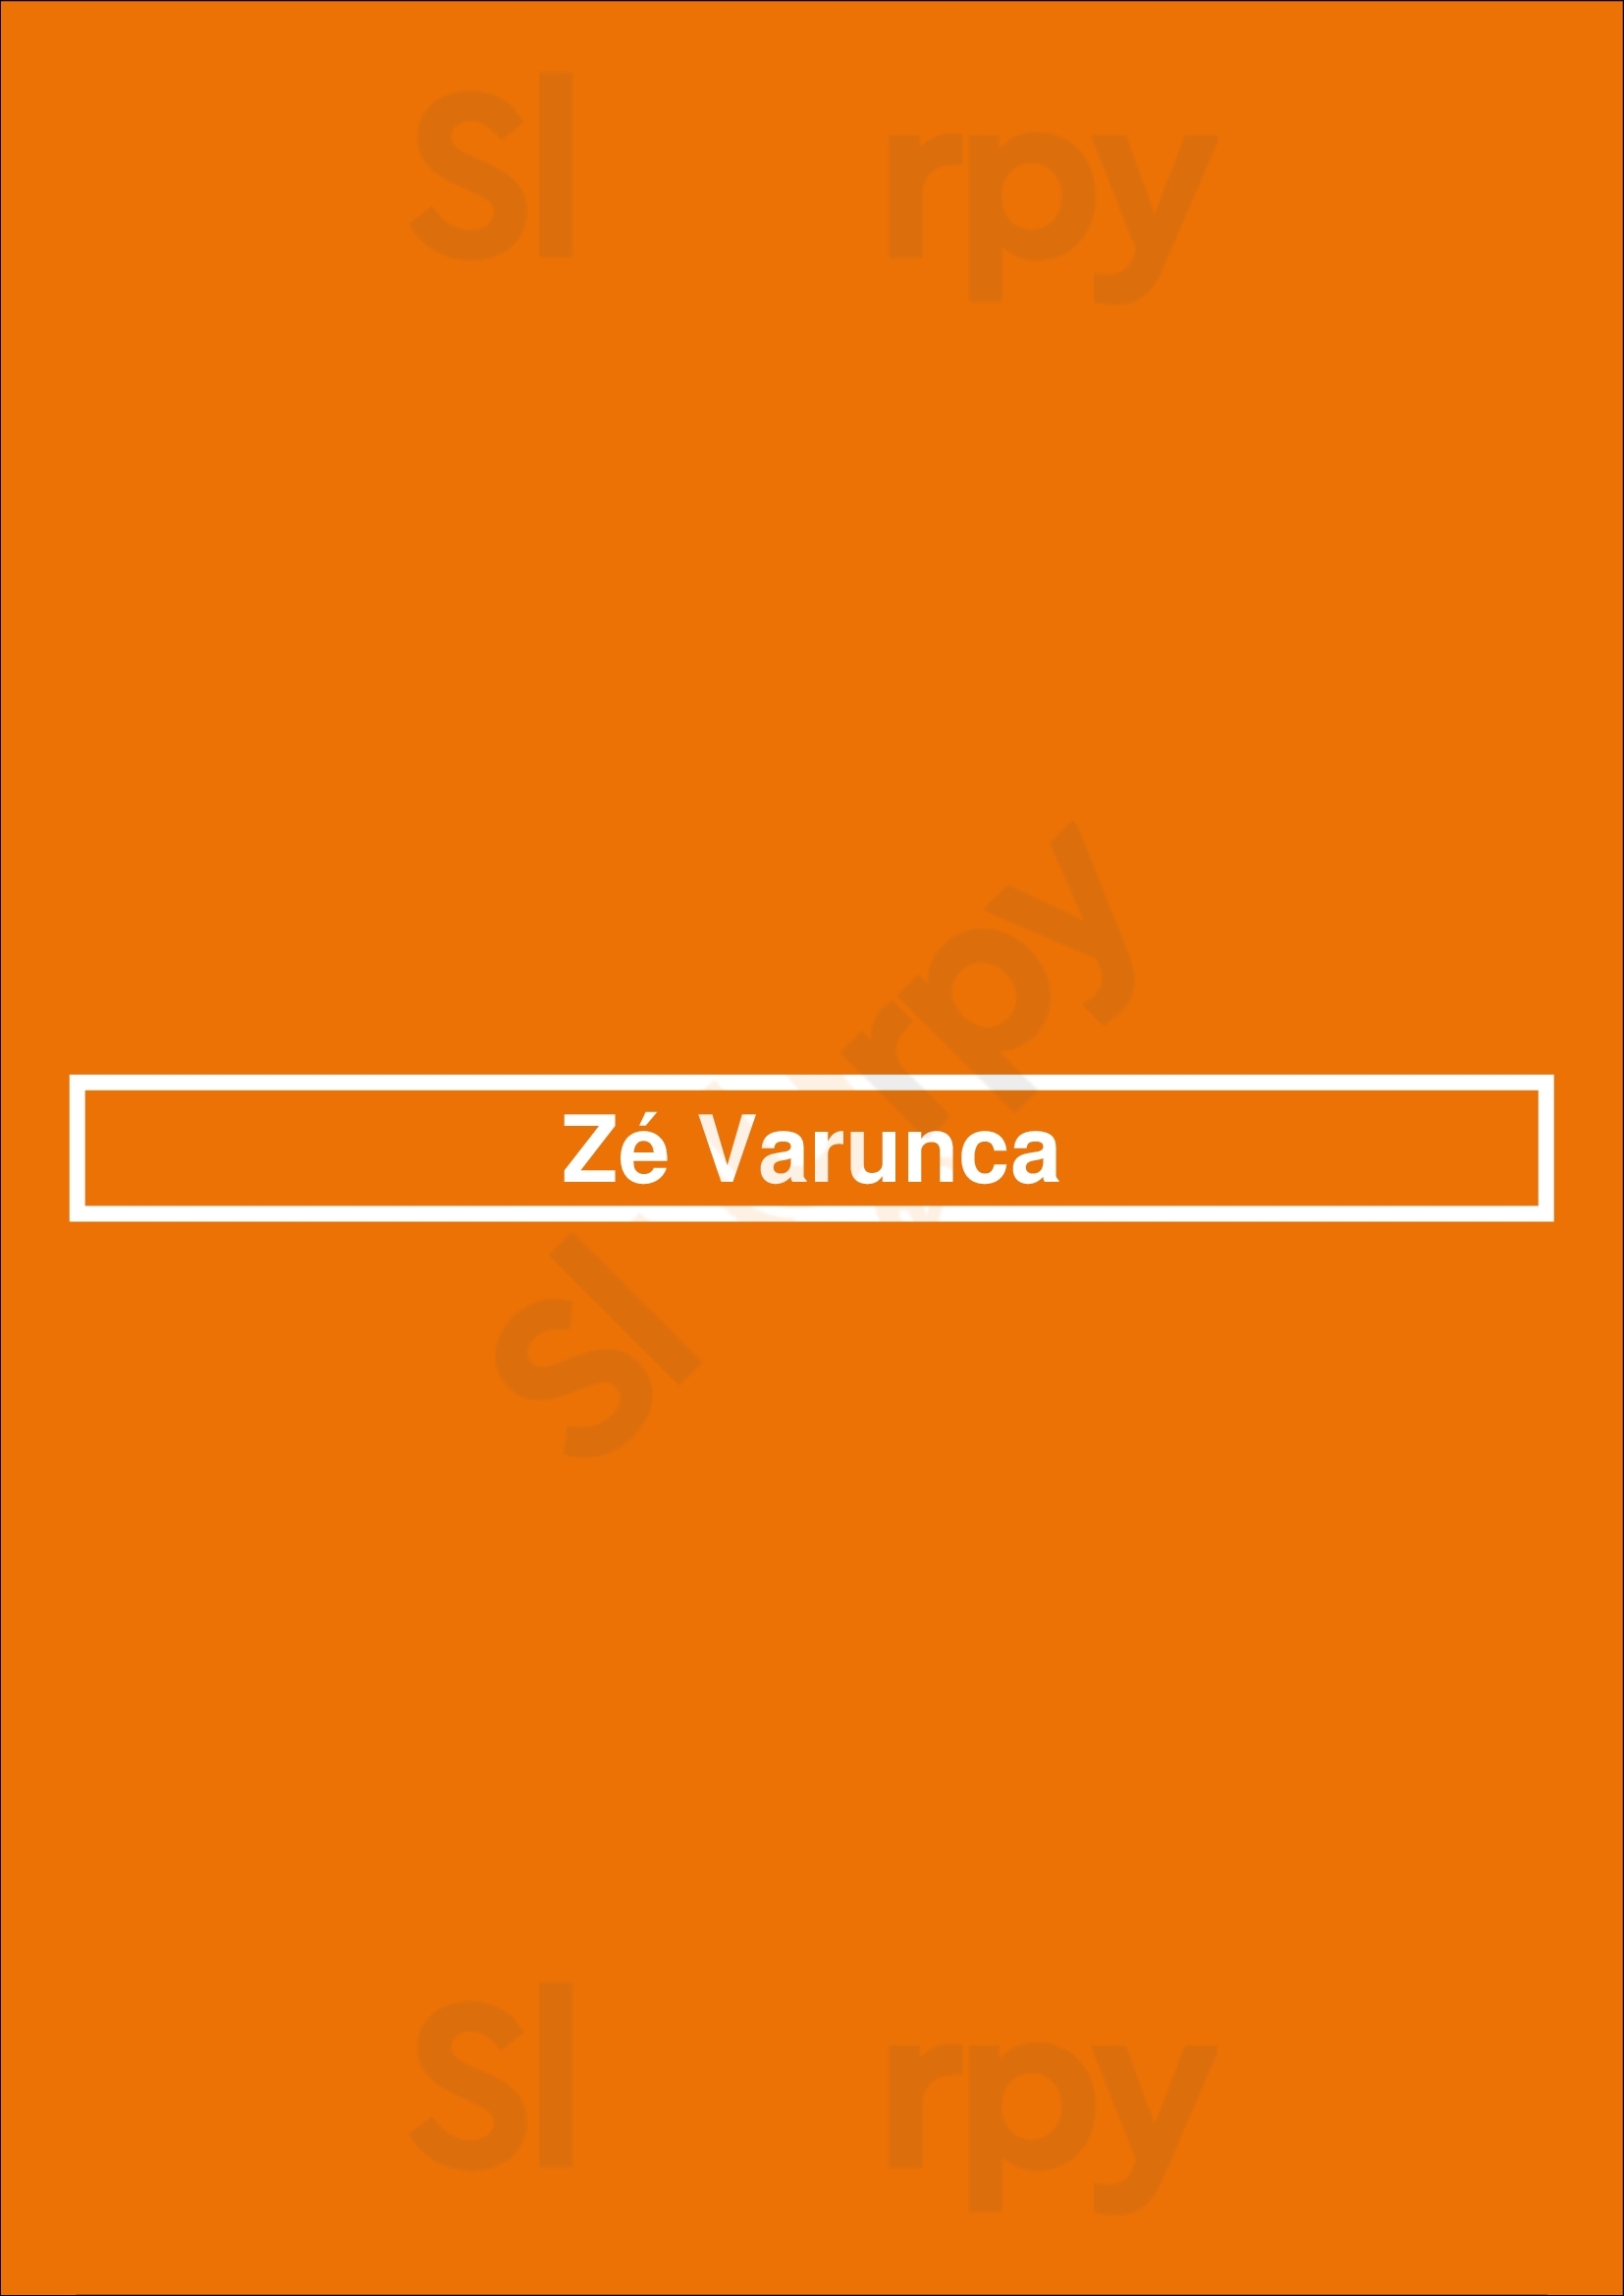 Zé Varunca Lisboa Menu - 1